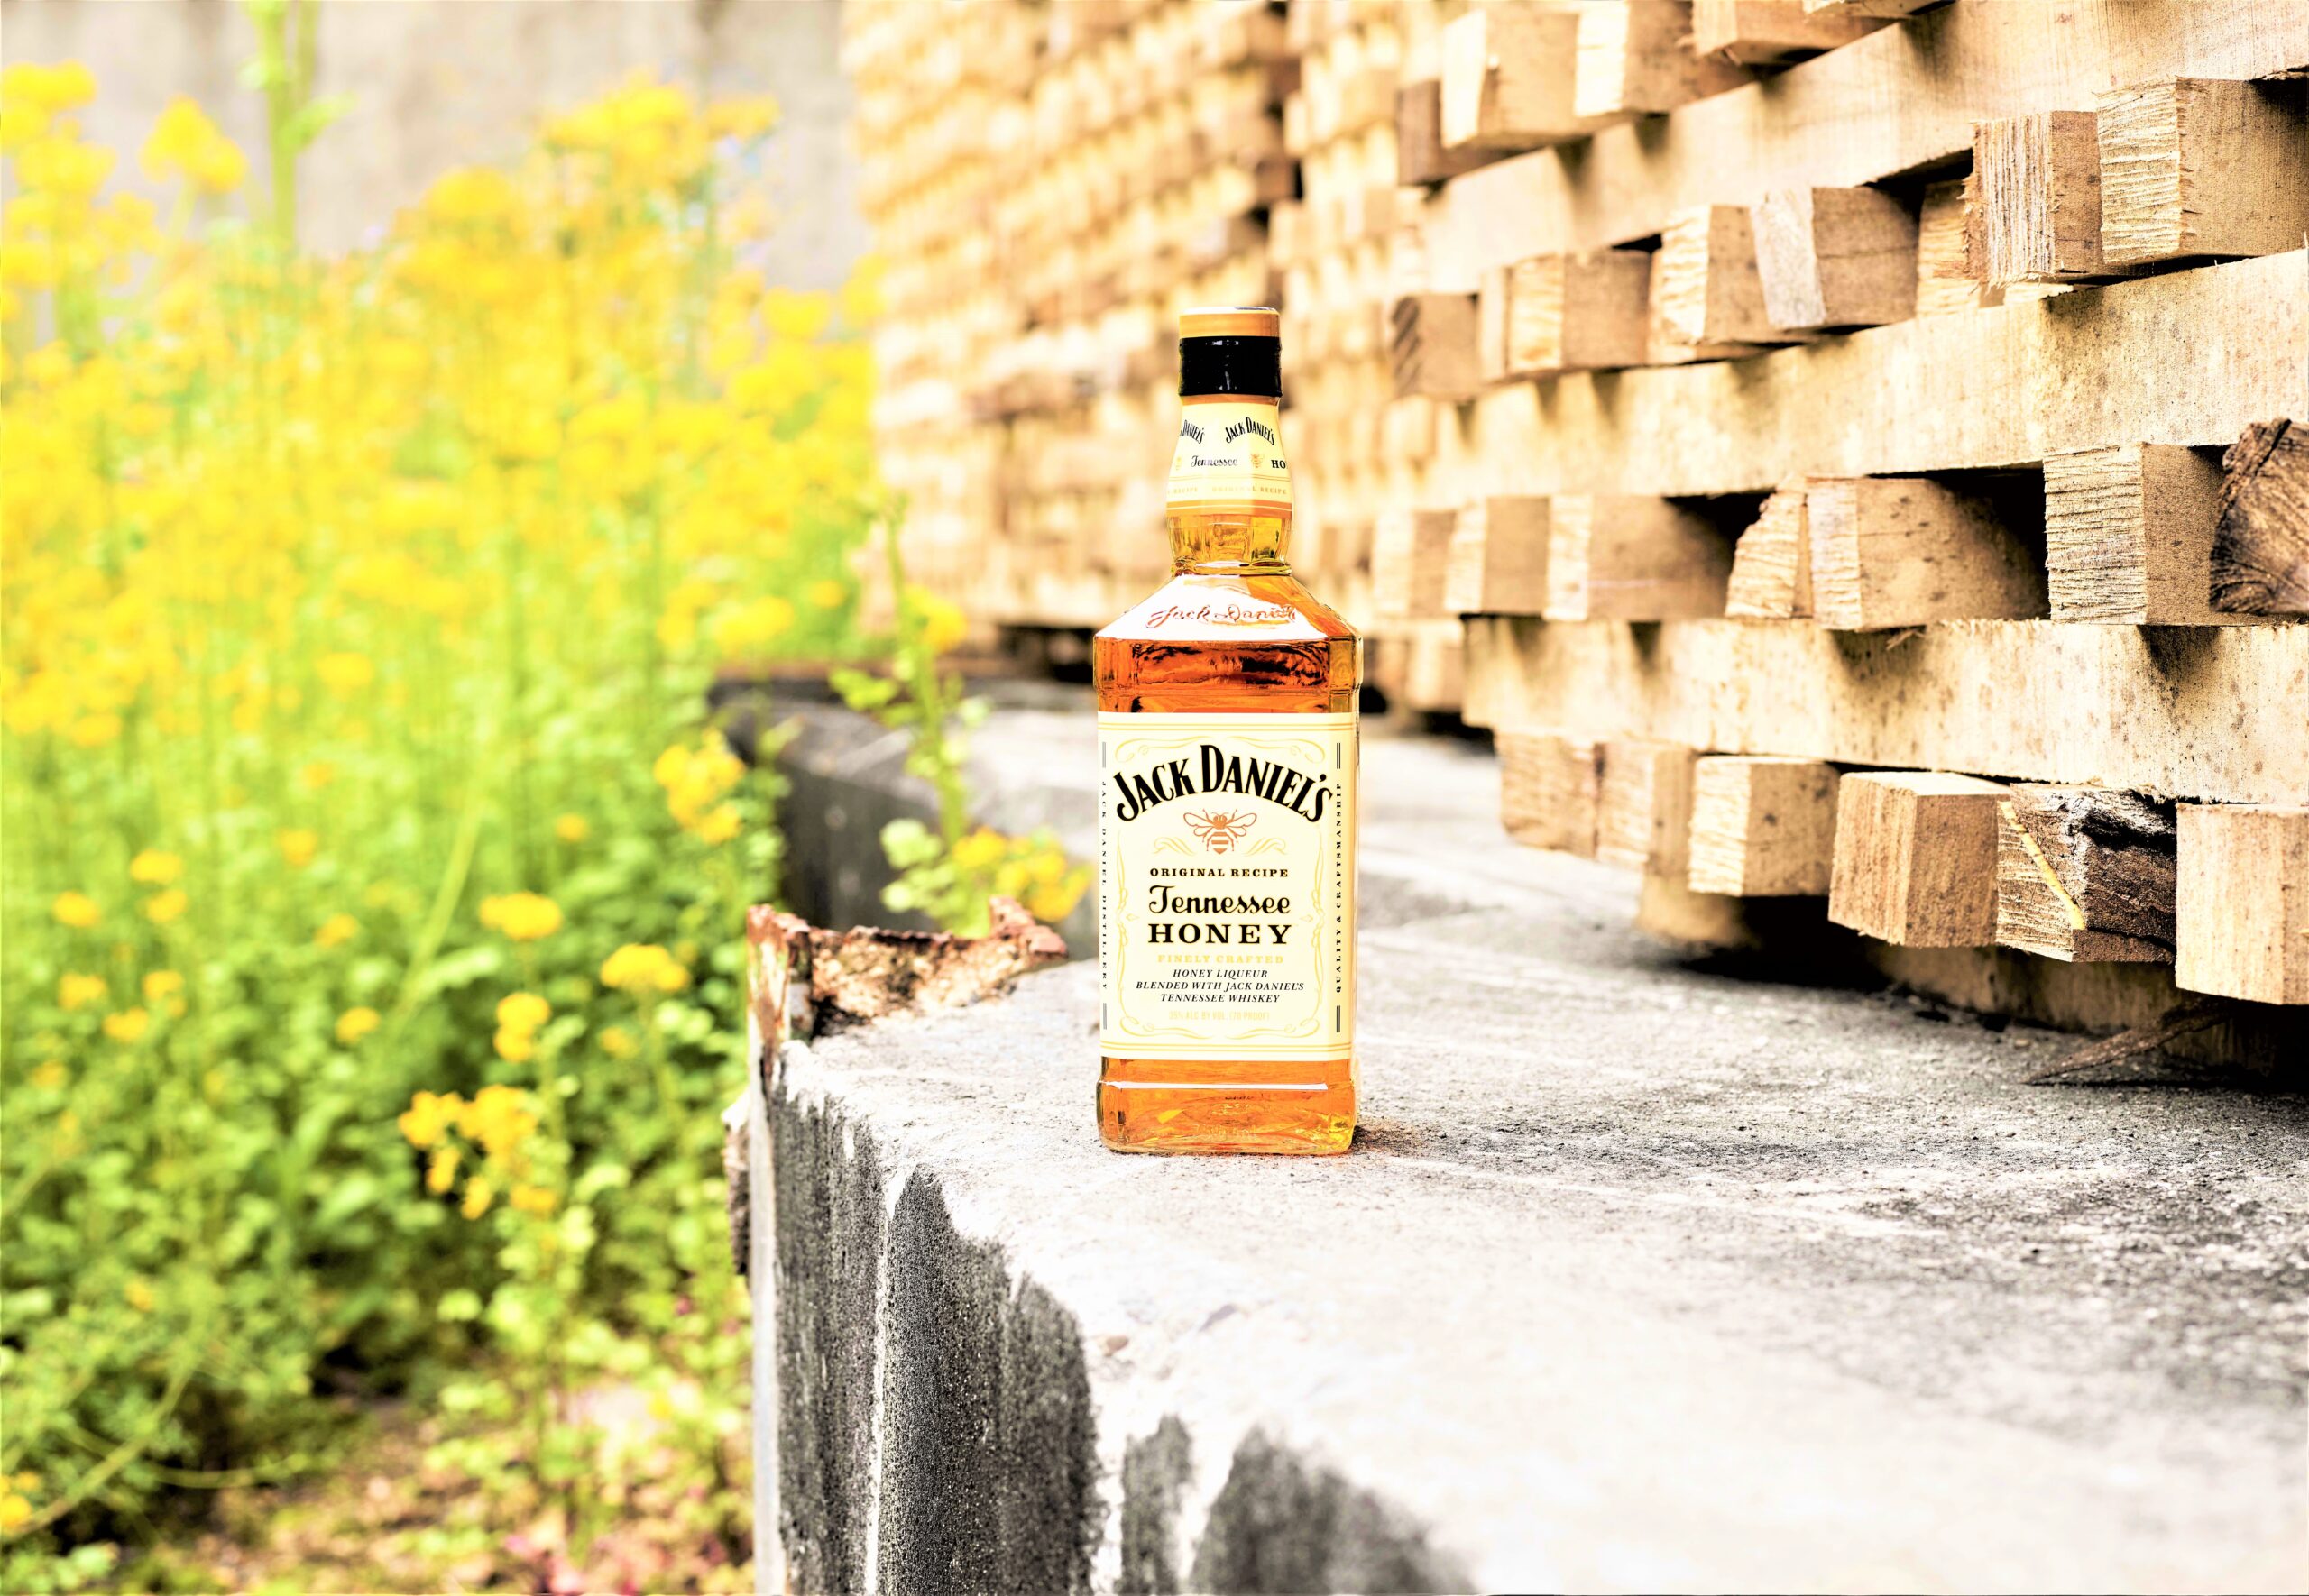 20 maggio World Bee Day. Jack Daniel’s Tennessee Honey